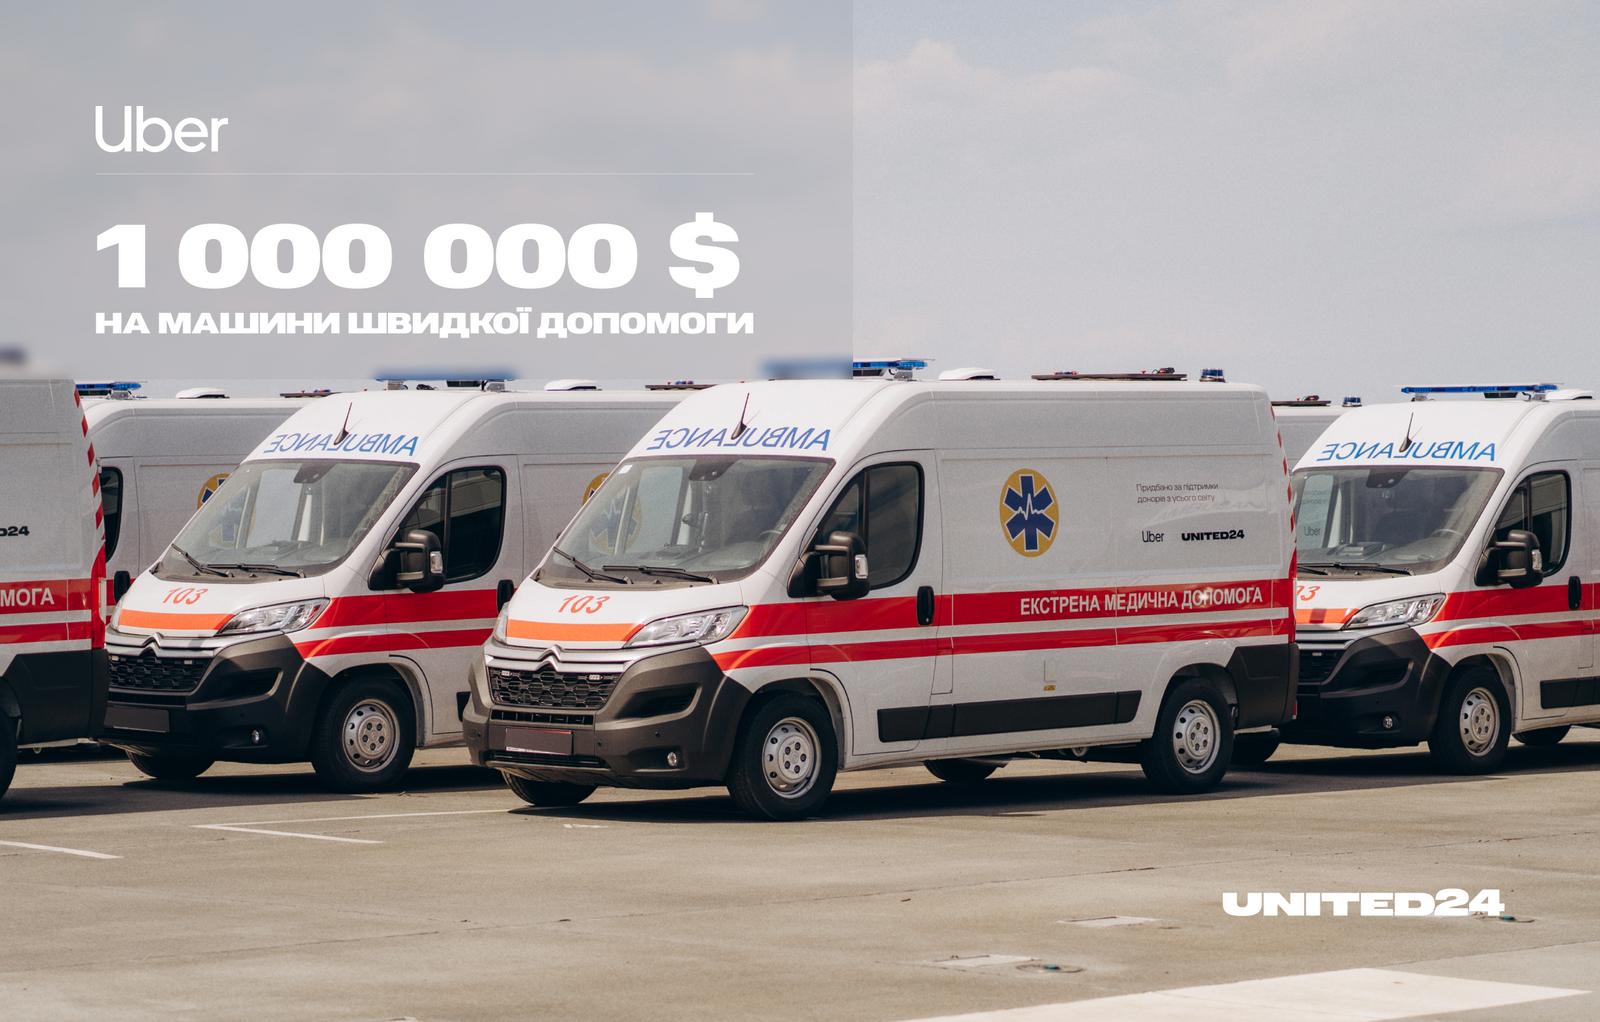 1 000 000 $ від Uber на машини швидкої допомоги 